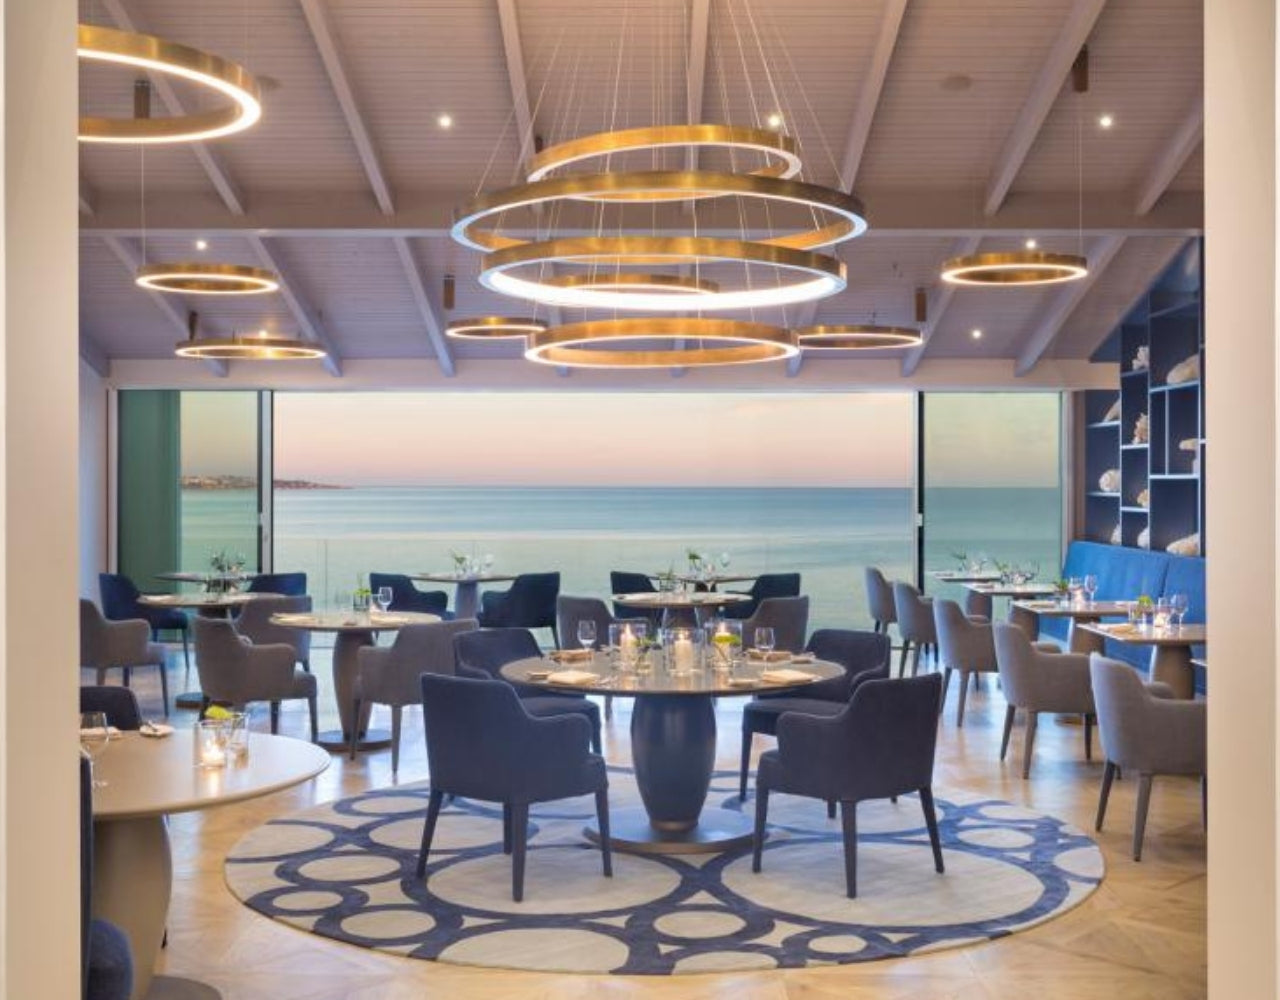 Ocean Restaurant in Algarve Portugal